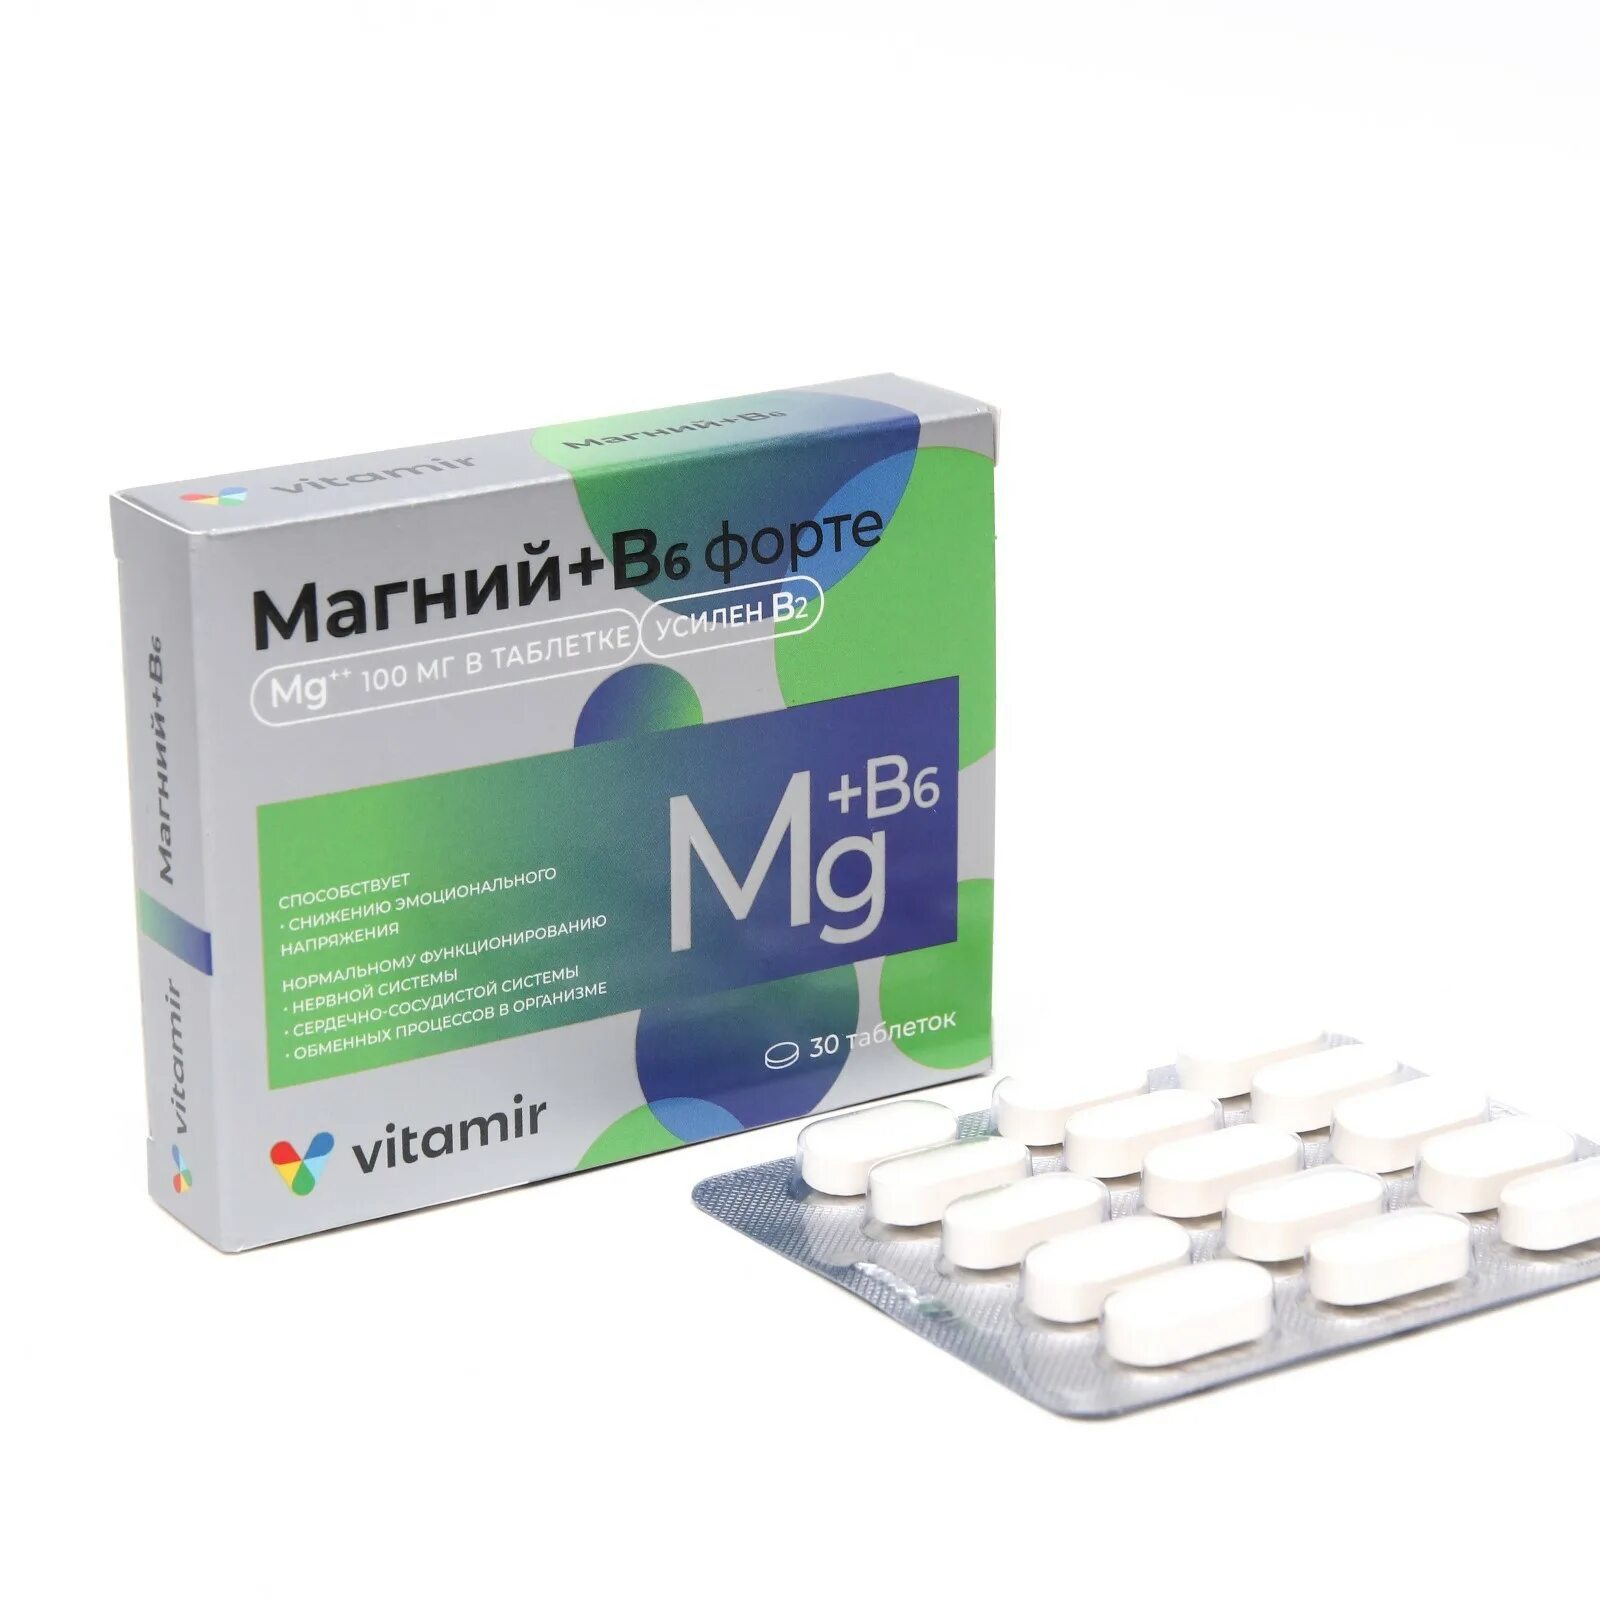 Magnesium b6 Forte. Магний б6 форте 100 мг. Магний форте в6 форте витамир.